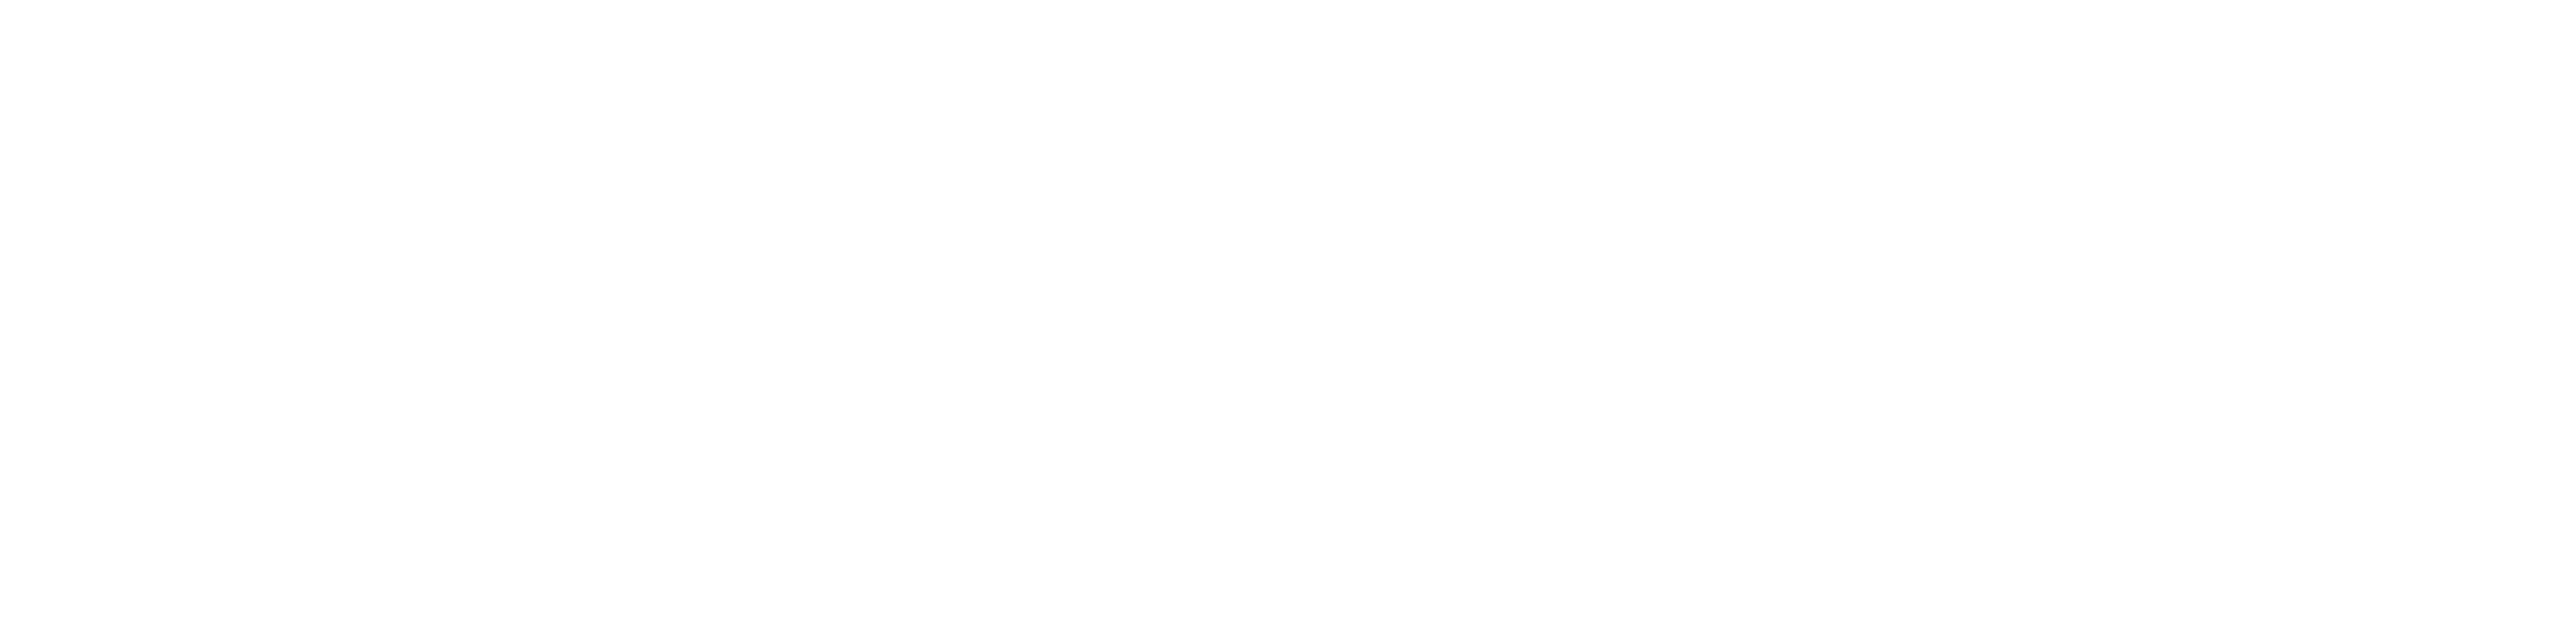 90-konto - Svensk Insamlingskontroll